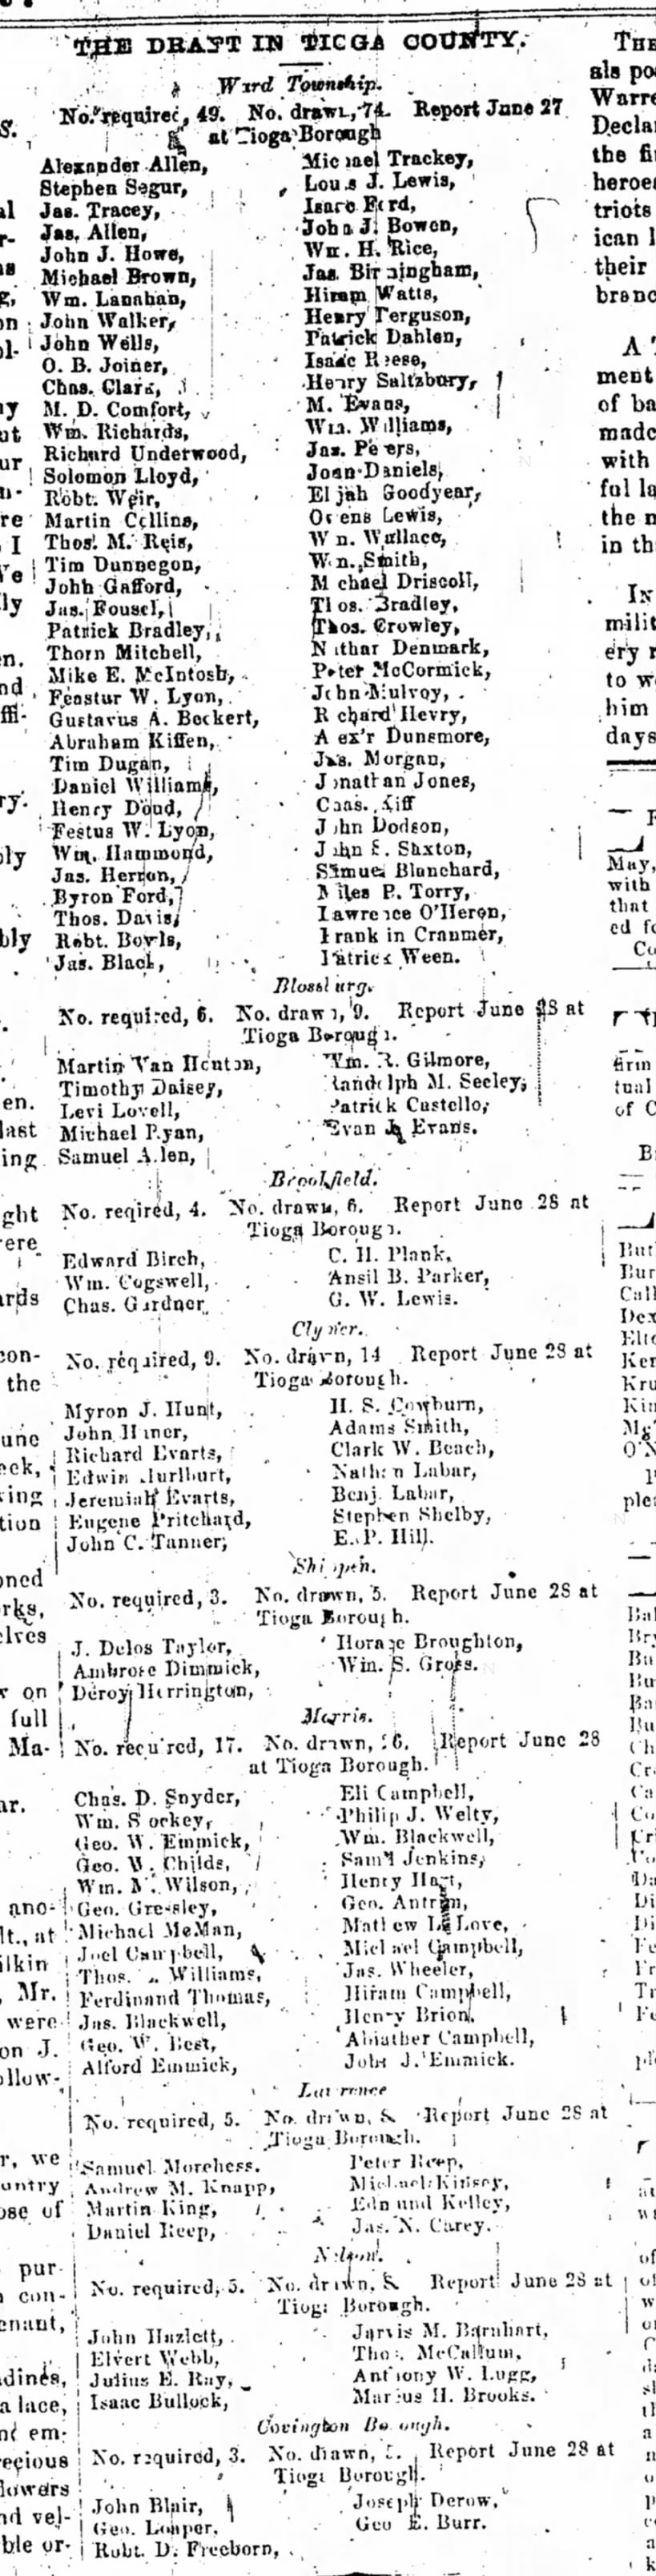 The Tioga County Agitator
Wednesday, June 8, 1864